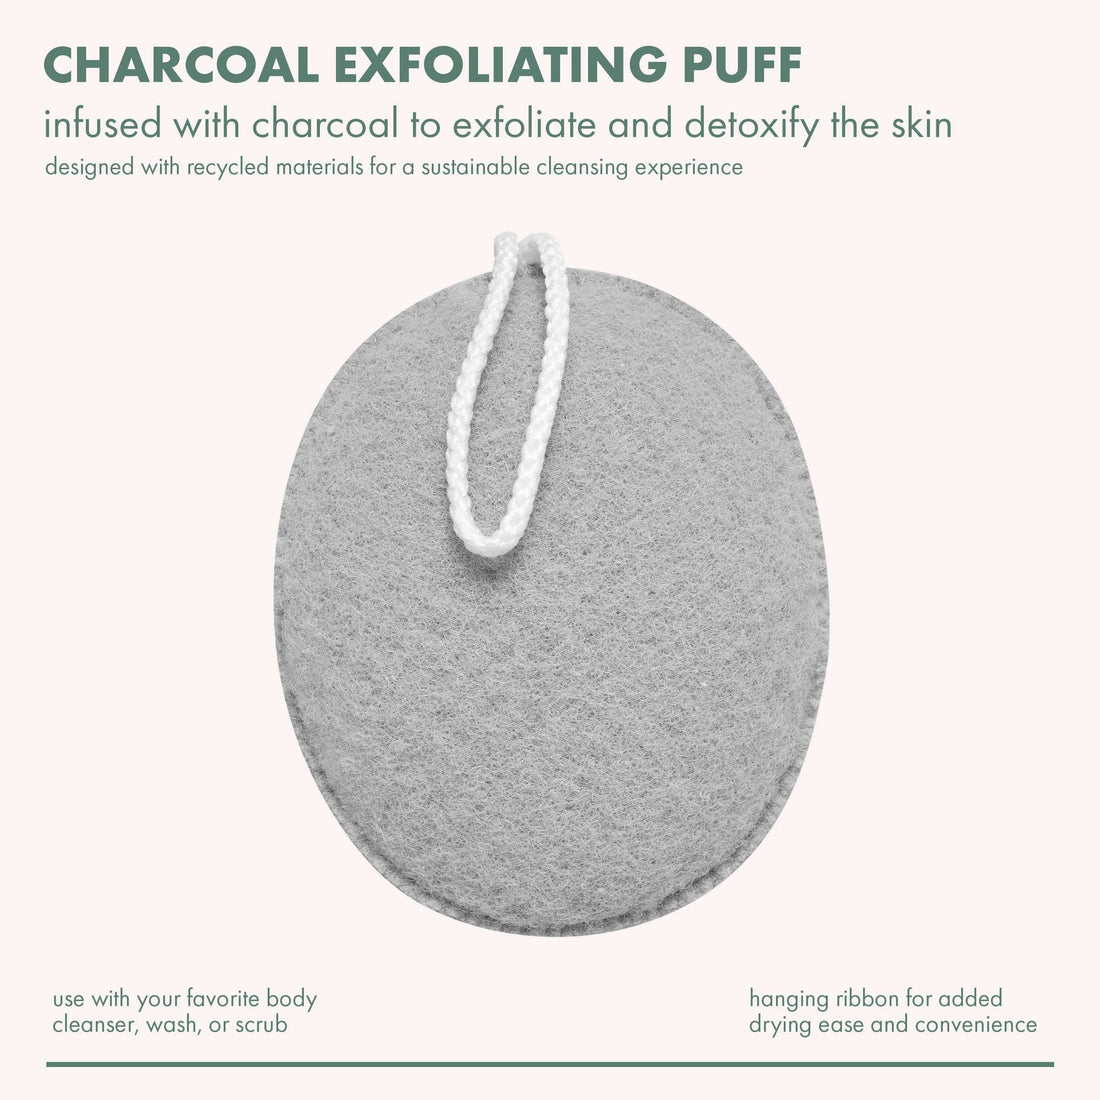 Charcoal Exfoliating Puff